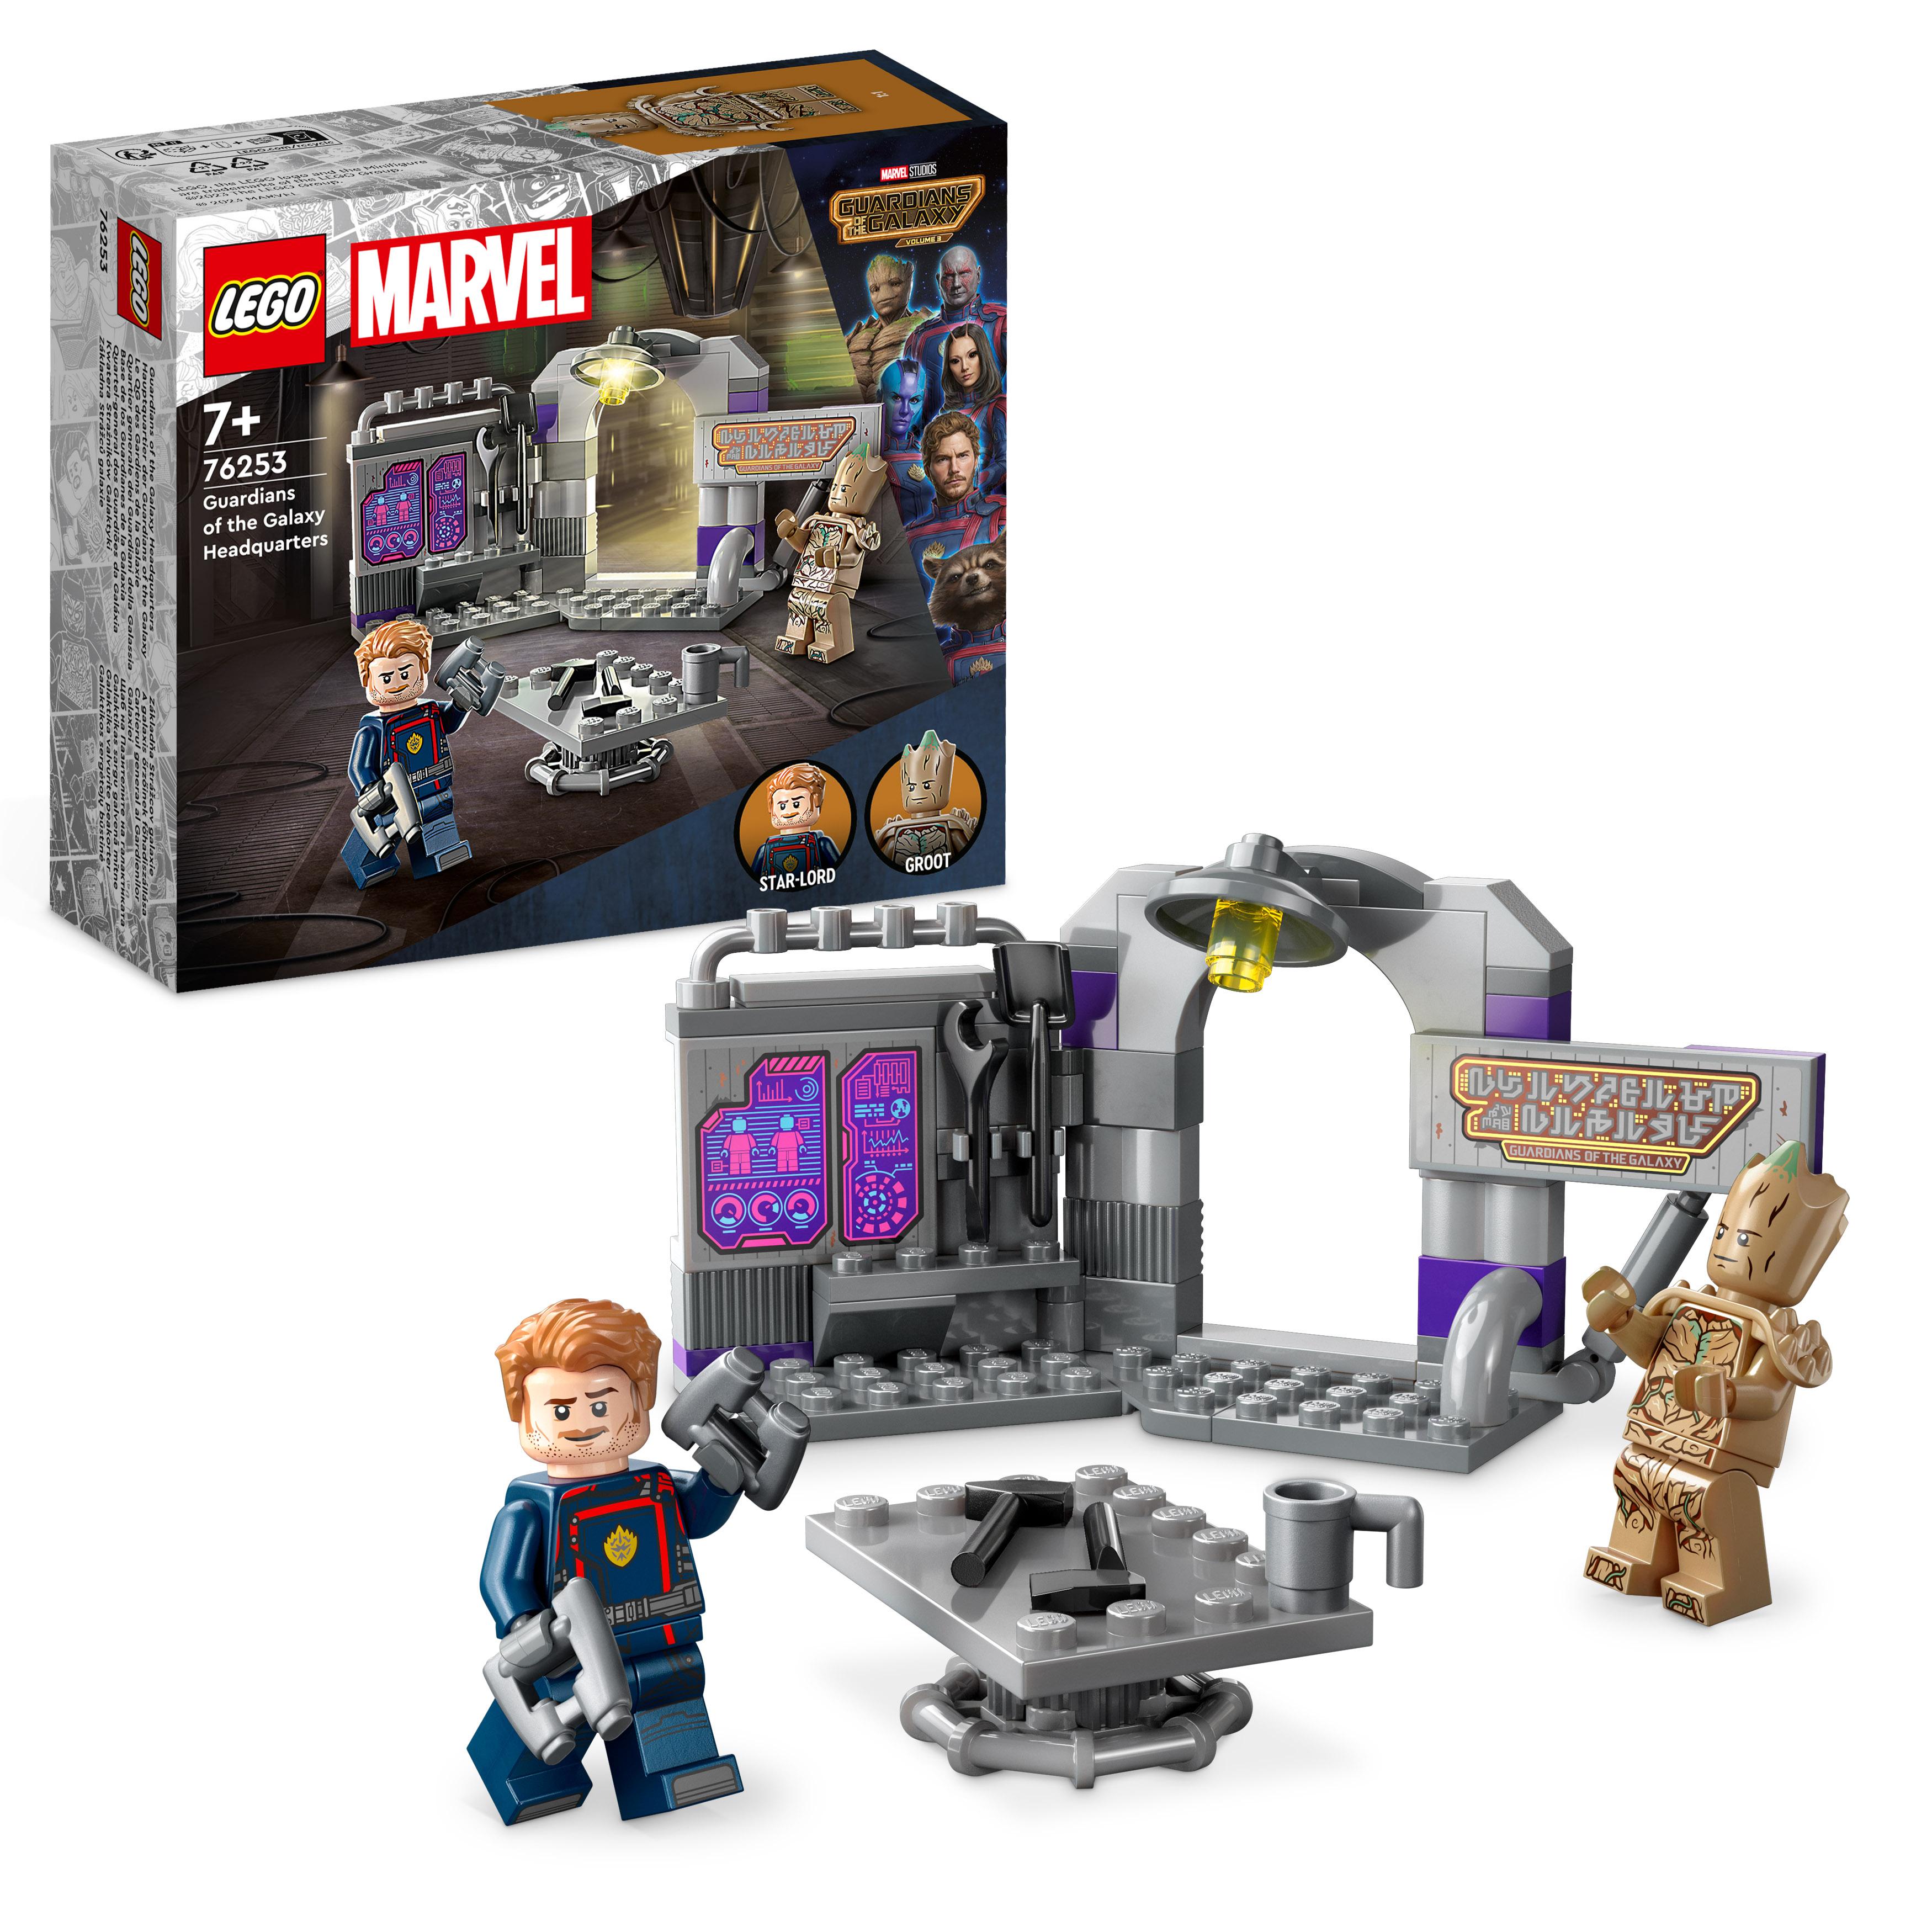 LEGO 76253 Marvel Hauptquartier der Guardians